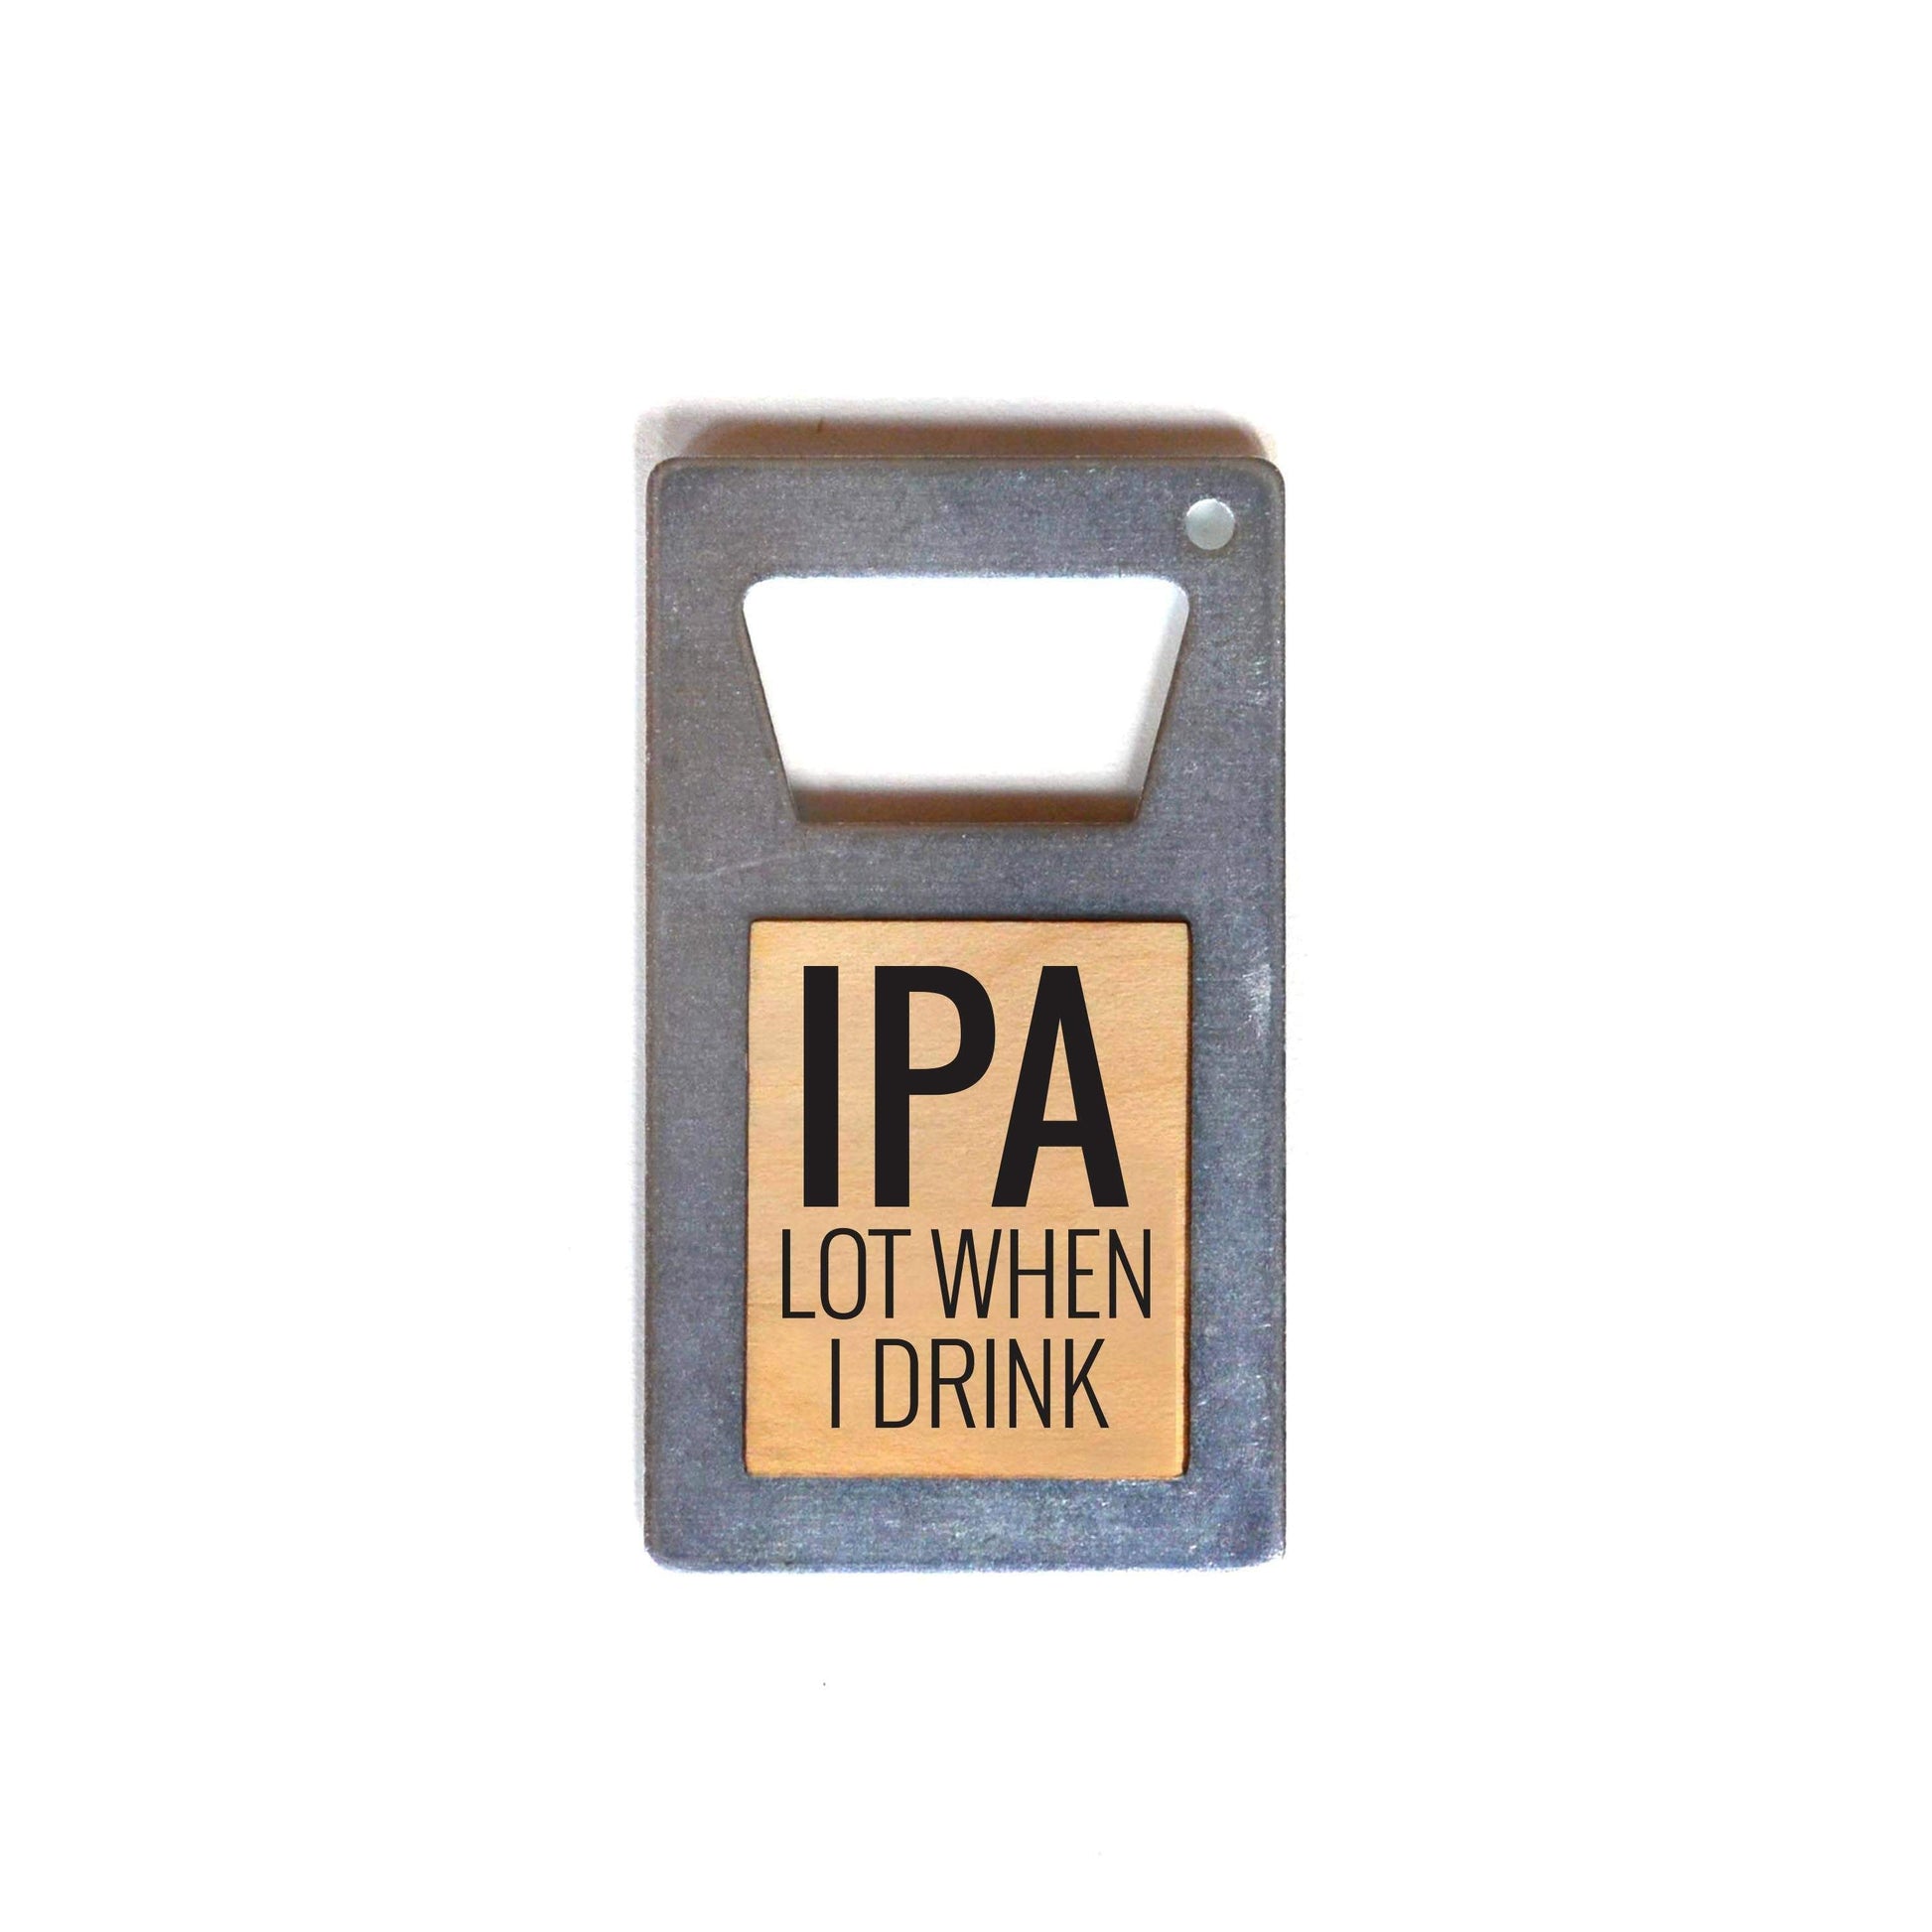 IPA Lot When I Drink Beer Bottle Opener - Mellow Monkey